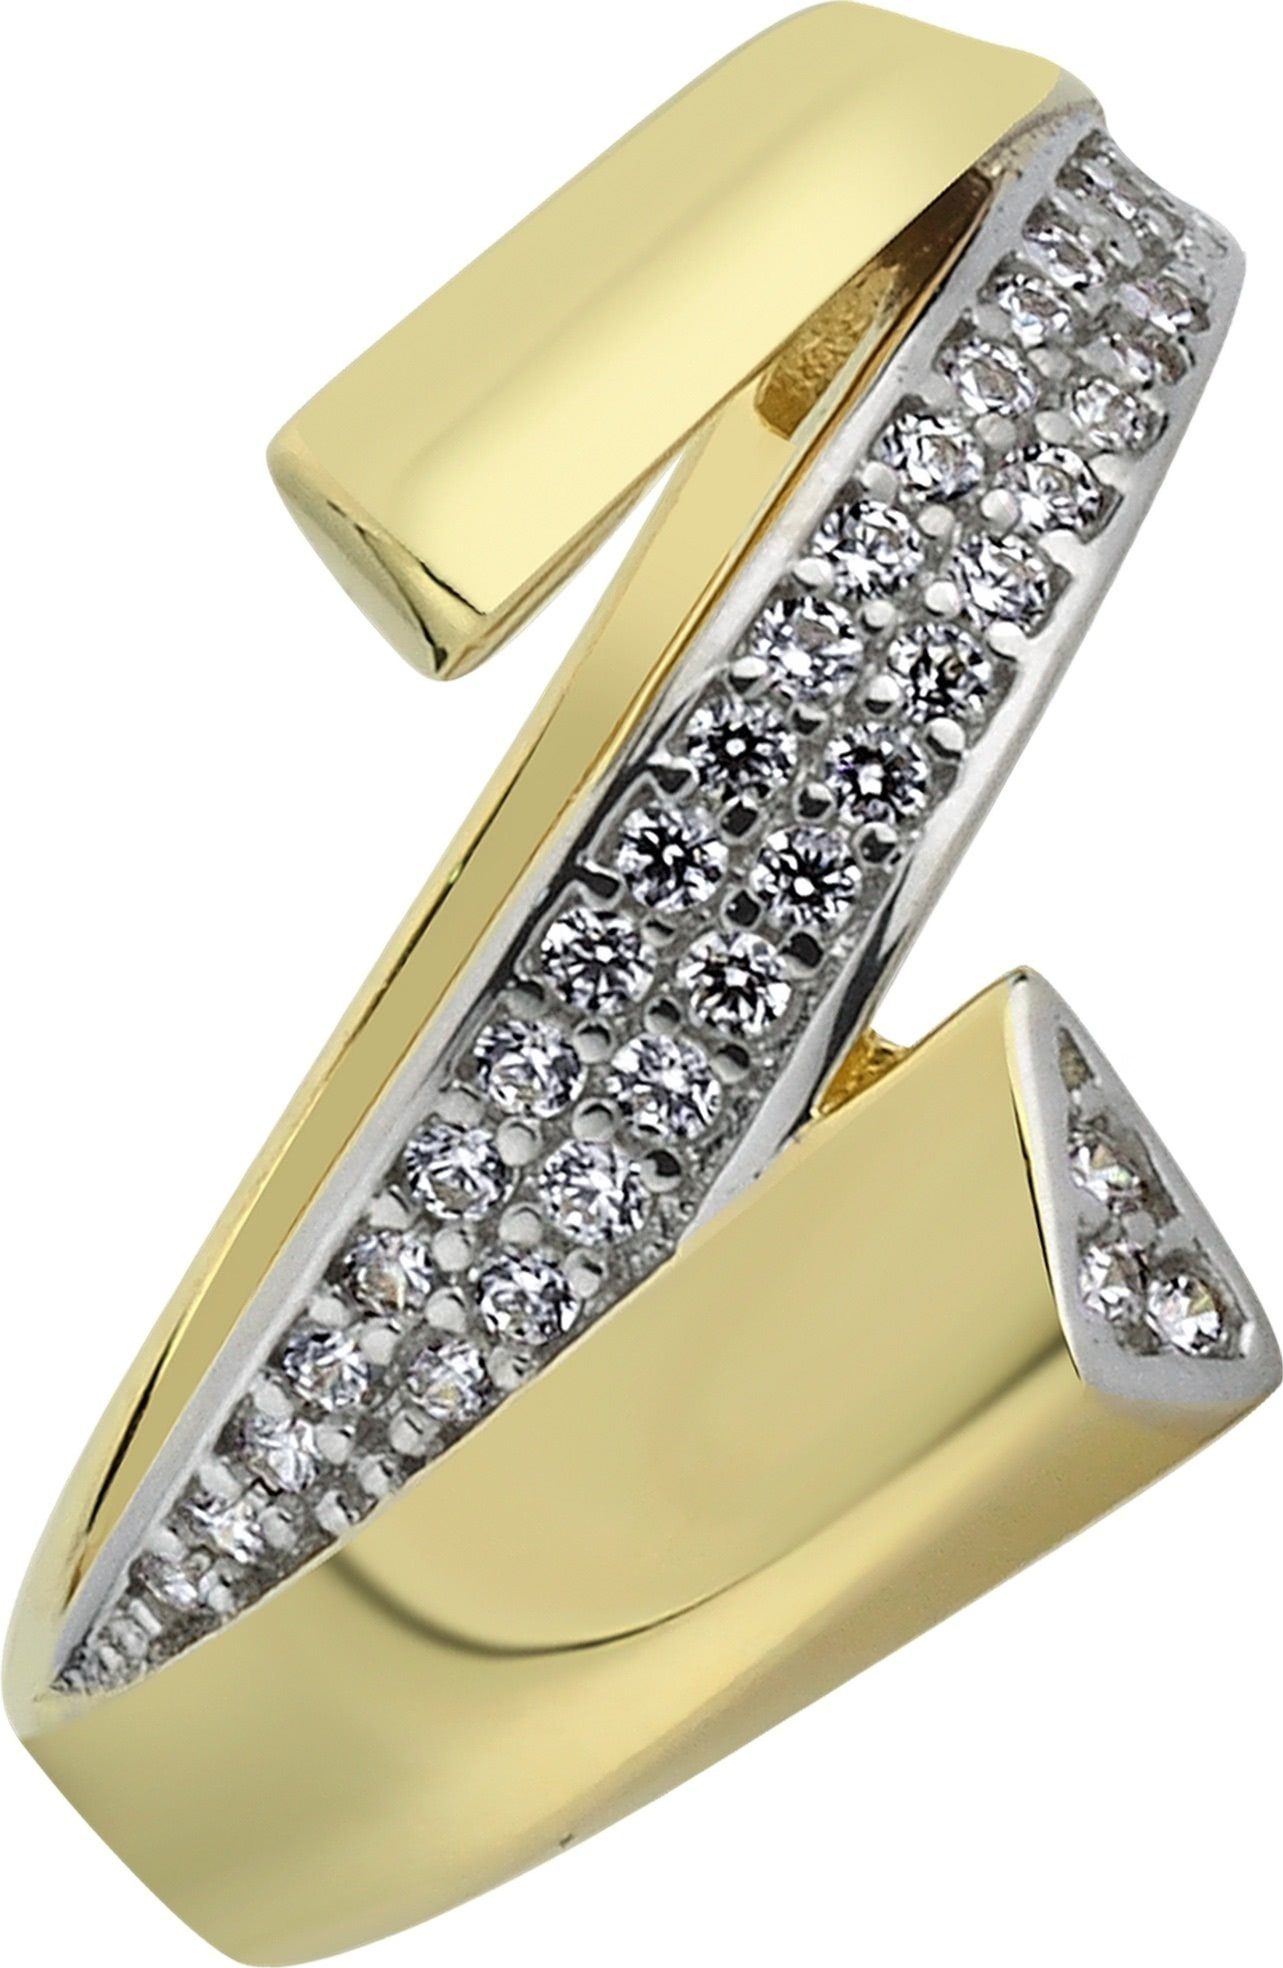 Balia Goldring Balia Damen Ring Gelbgold 8Karat Gr.58 (Fingerring), Damen Ring Glamour aus 333er Goldgold - 8 Karat, Farbe: weiß, gold